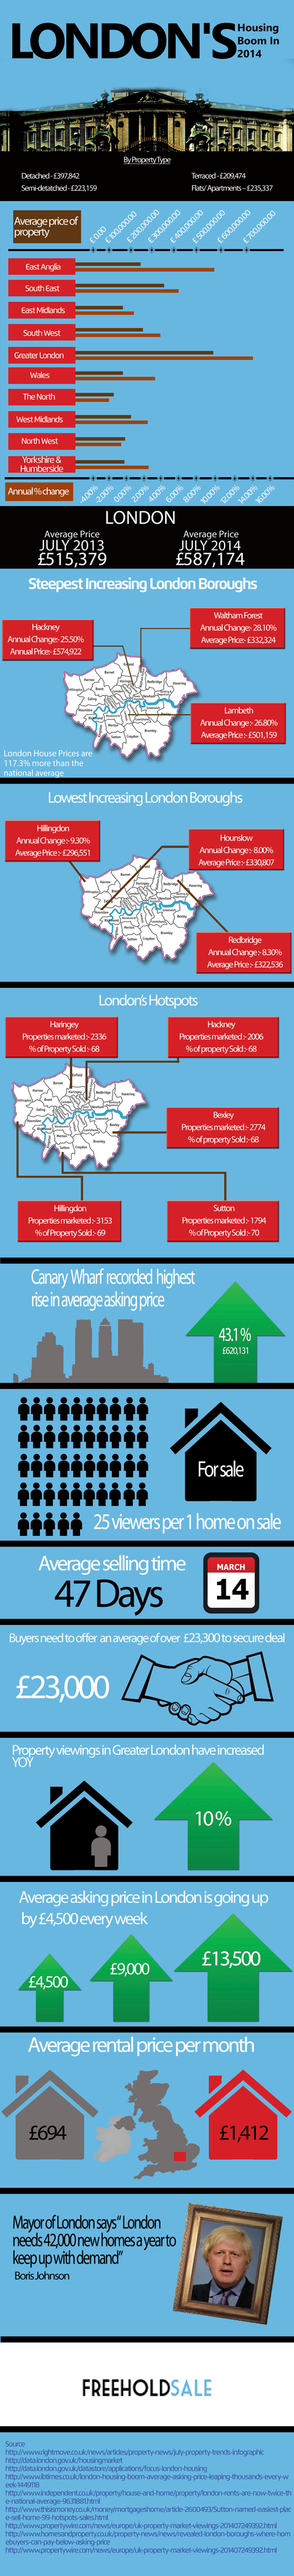 London-housing-boom-2014-infographic-1